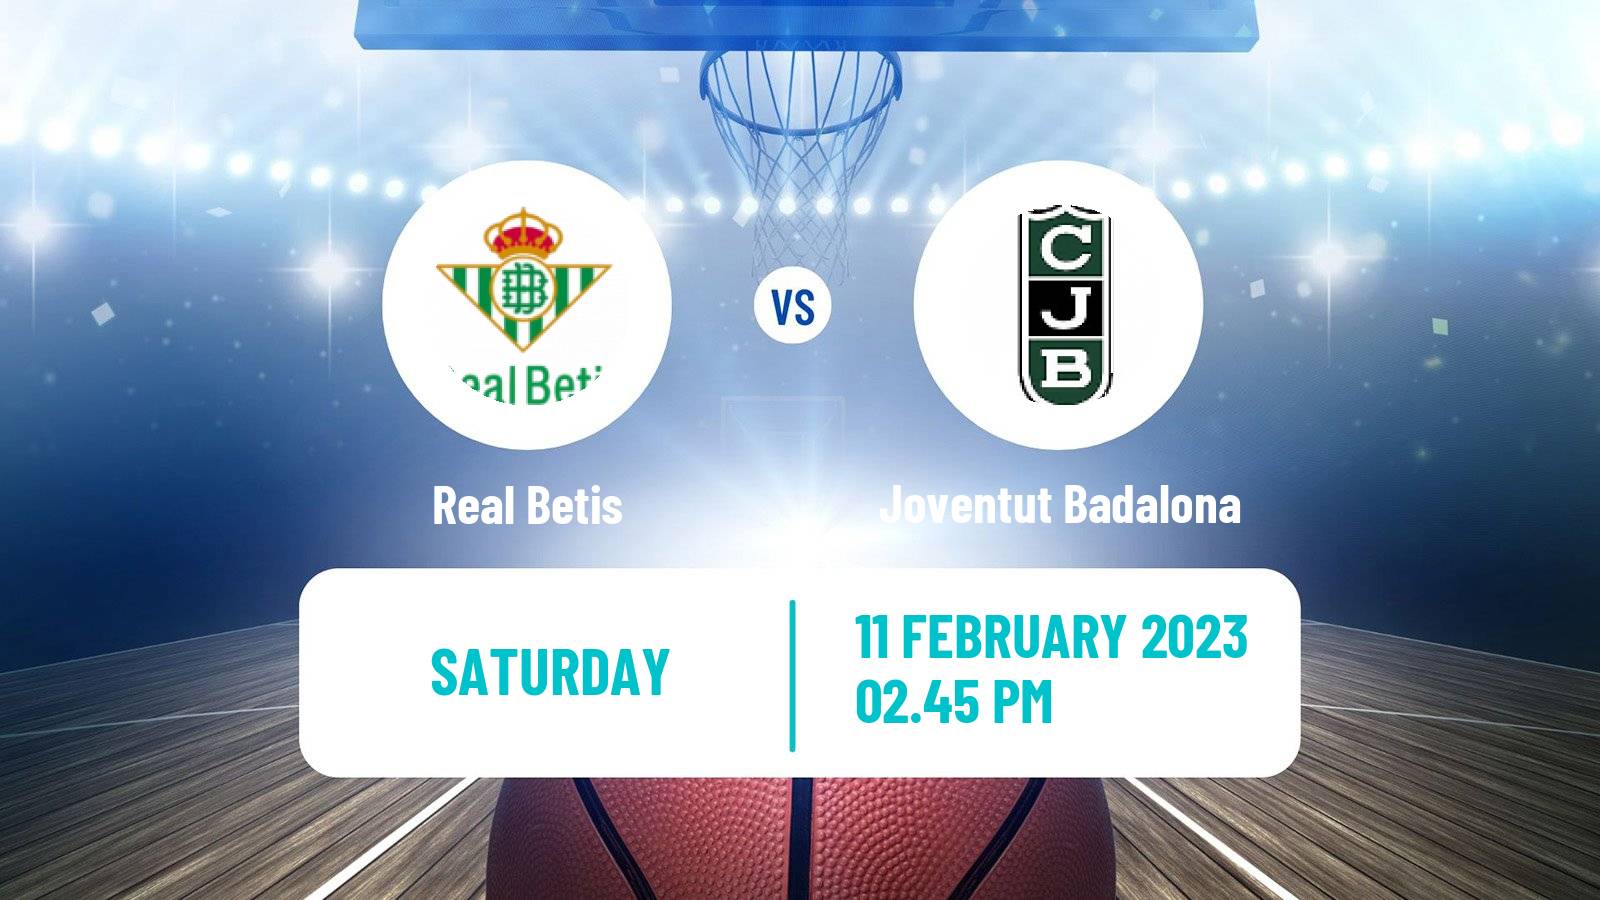 Basketball Spanish ACB League Real Betis - Joventut Badalona